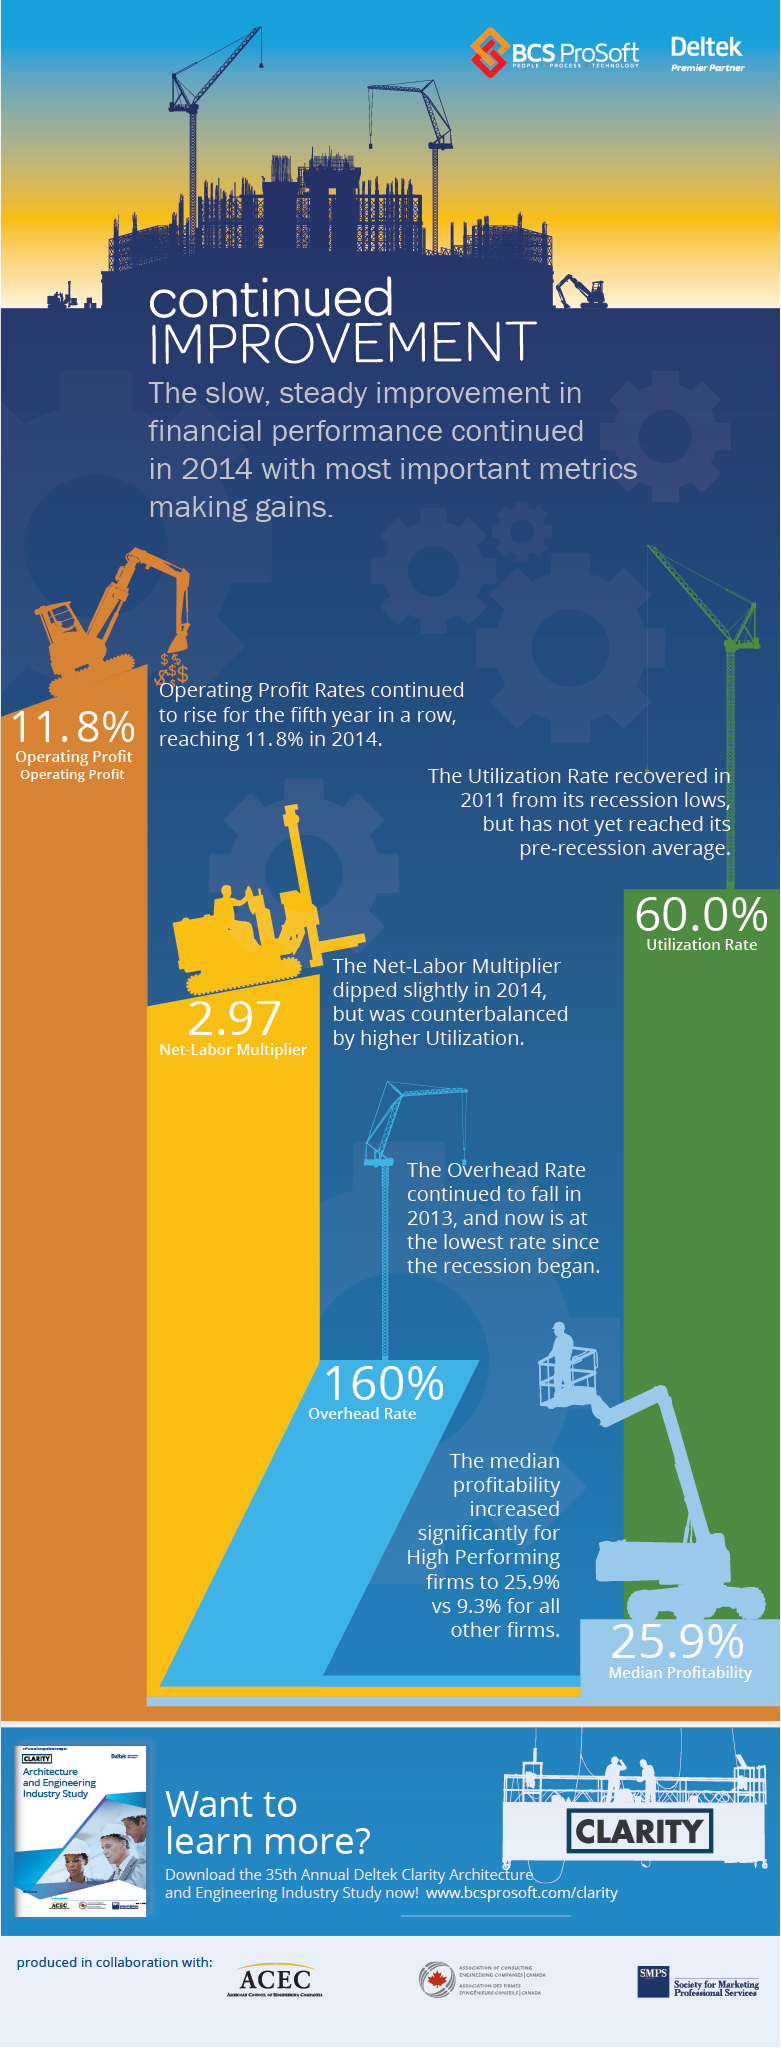 deltek-clarity-ae-2015-infographic